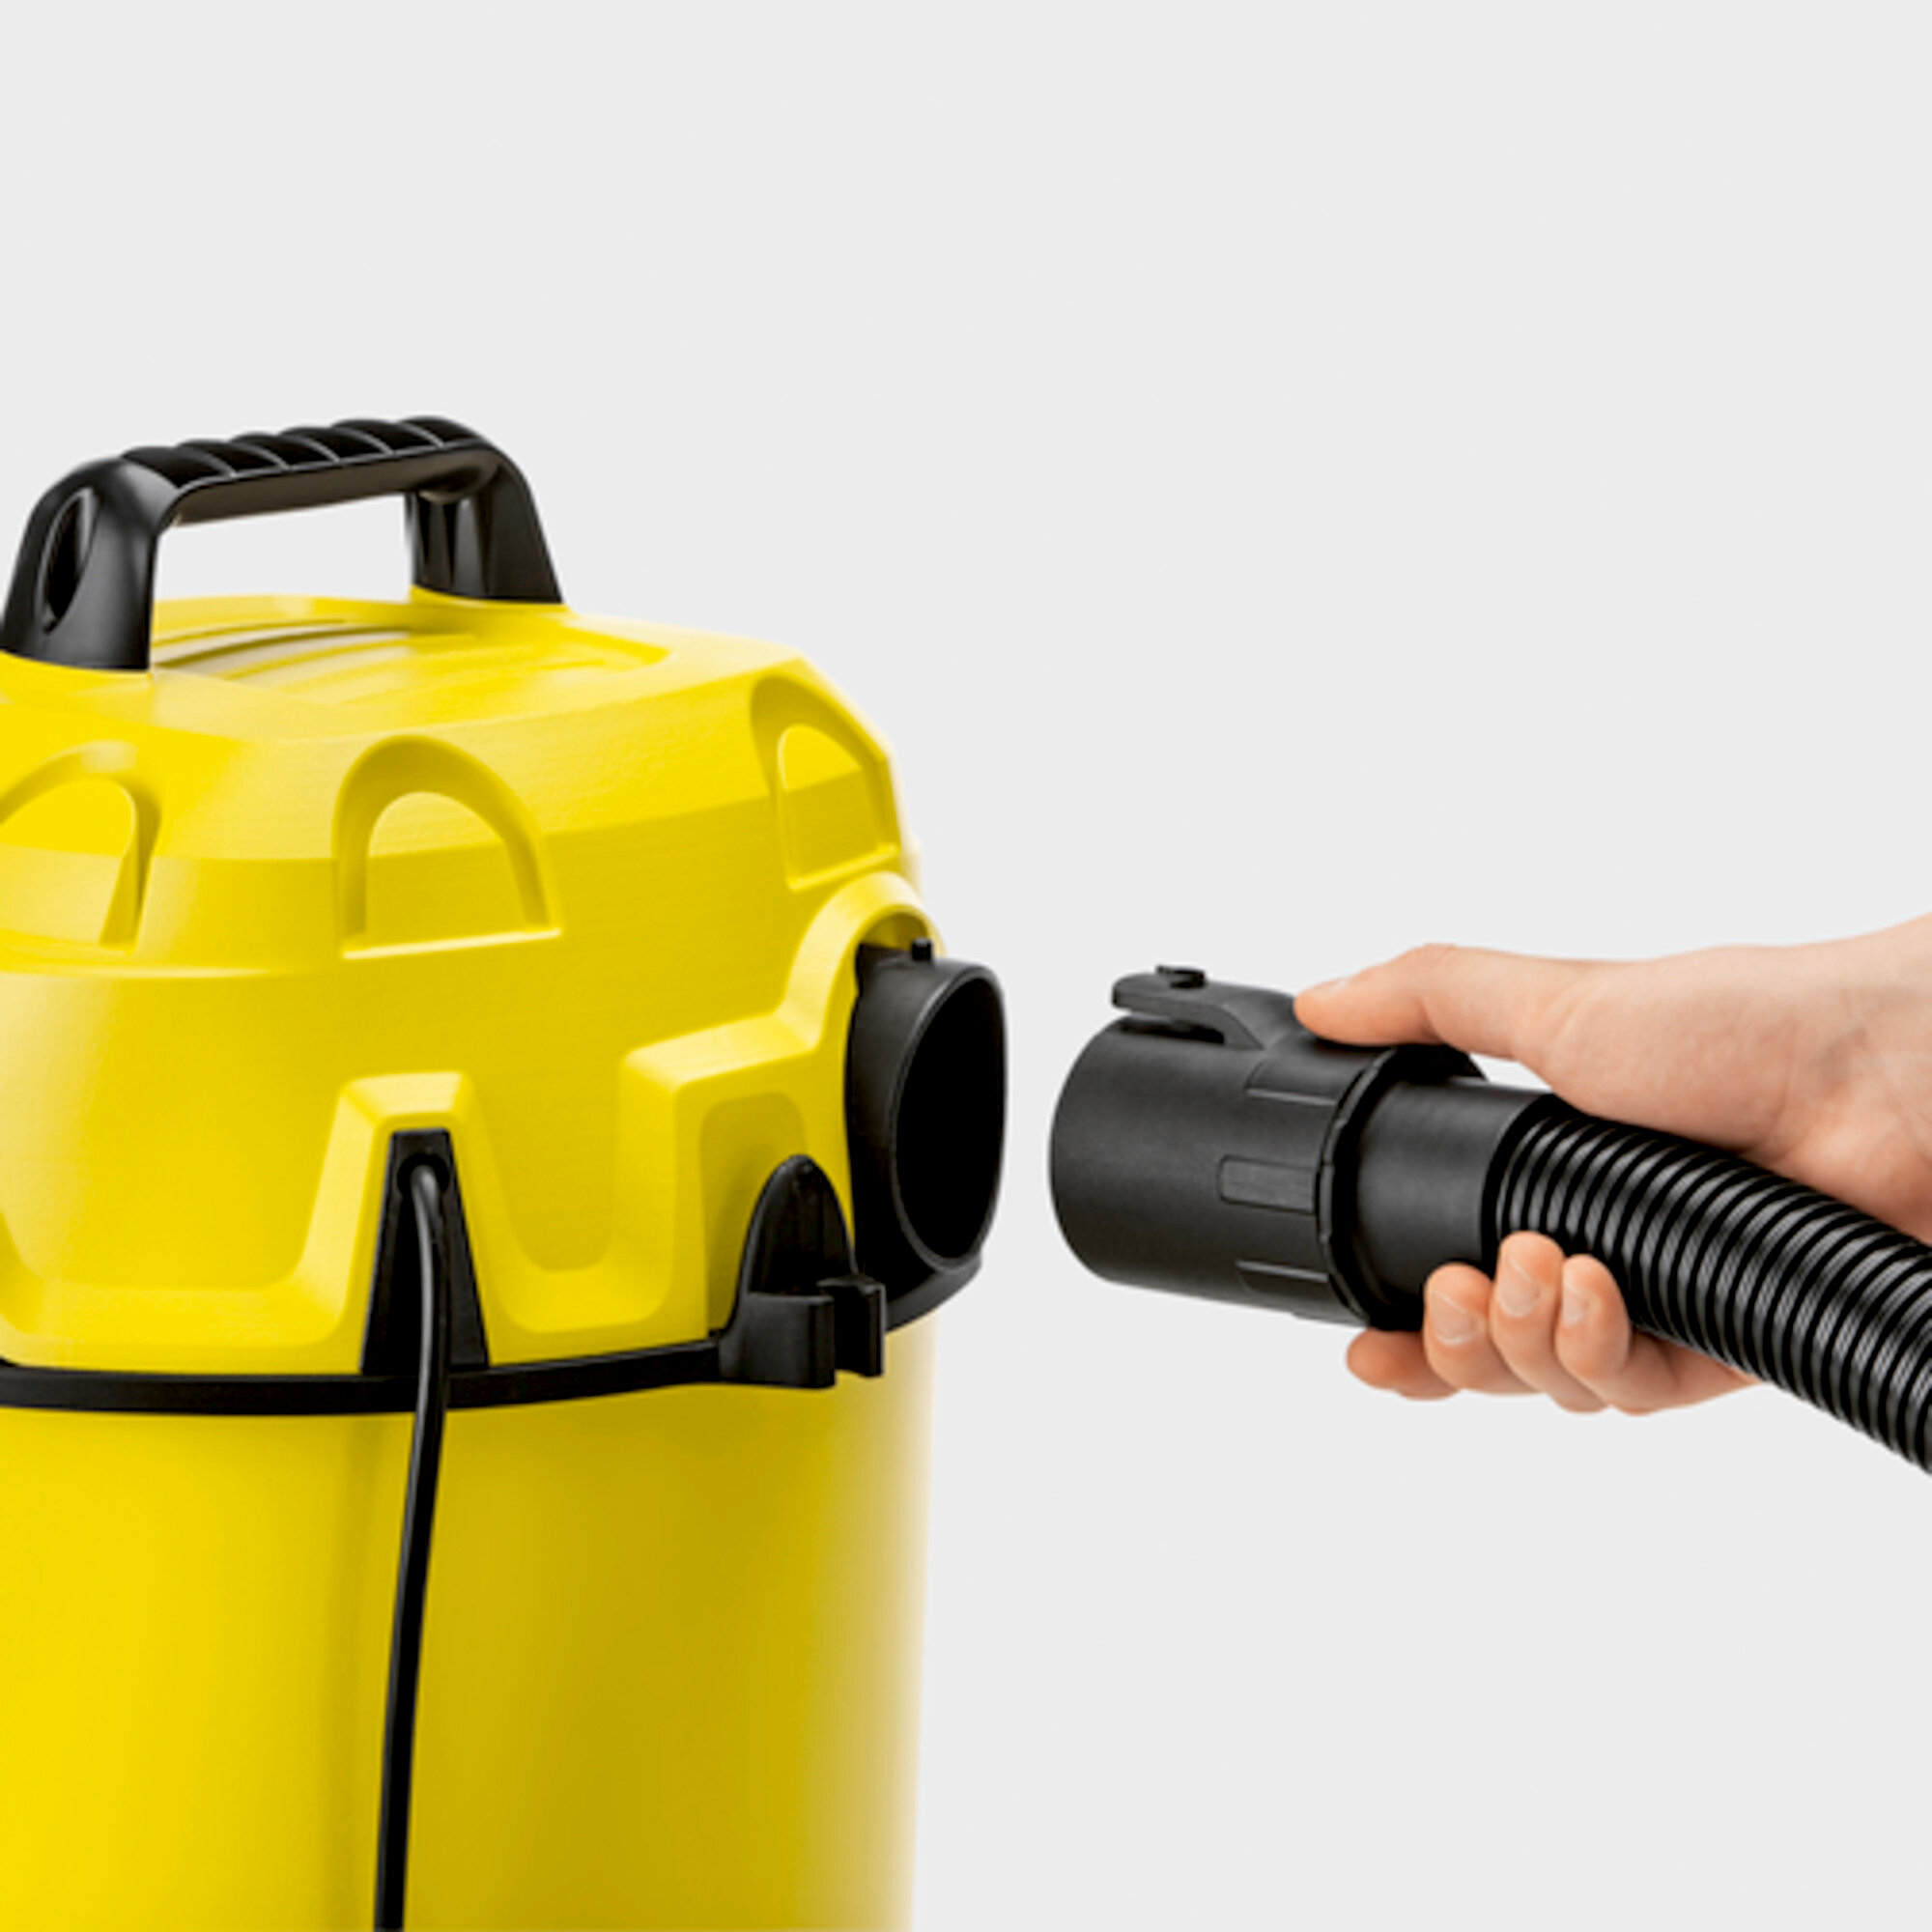 Multi-purpose vacuum cleaner WD 1 Home: Practical blower function